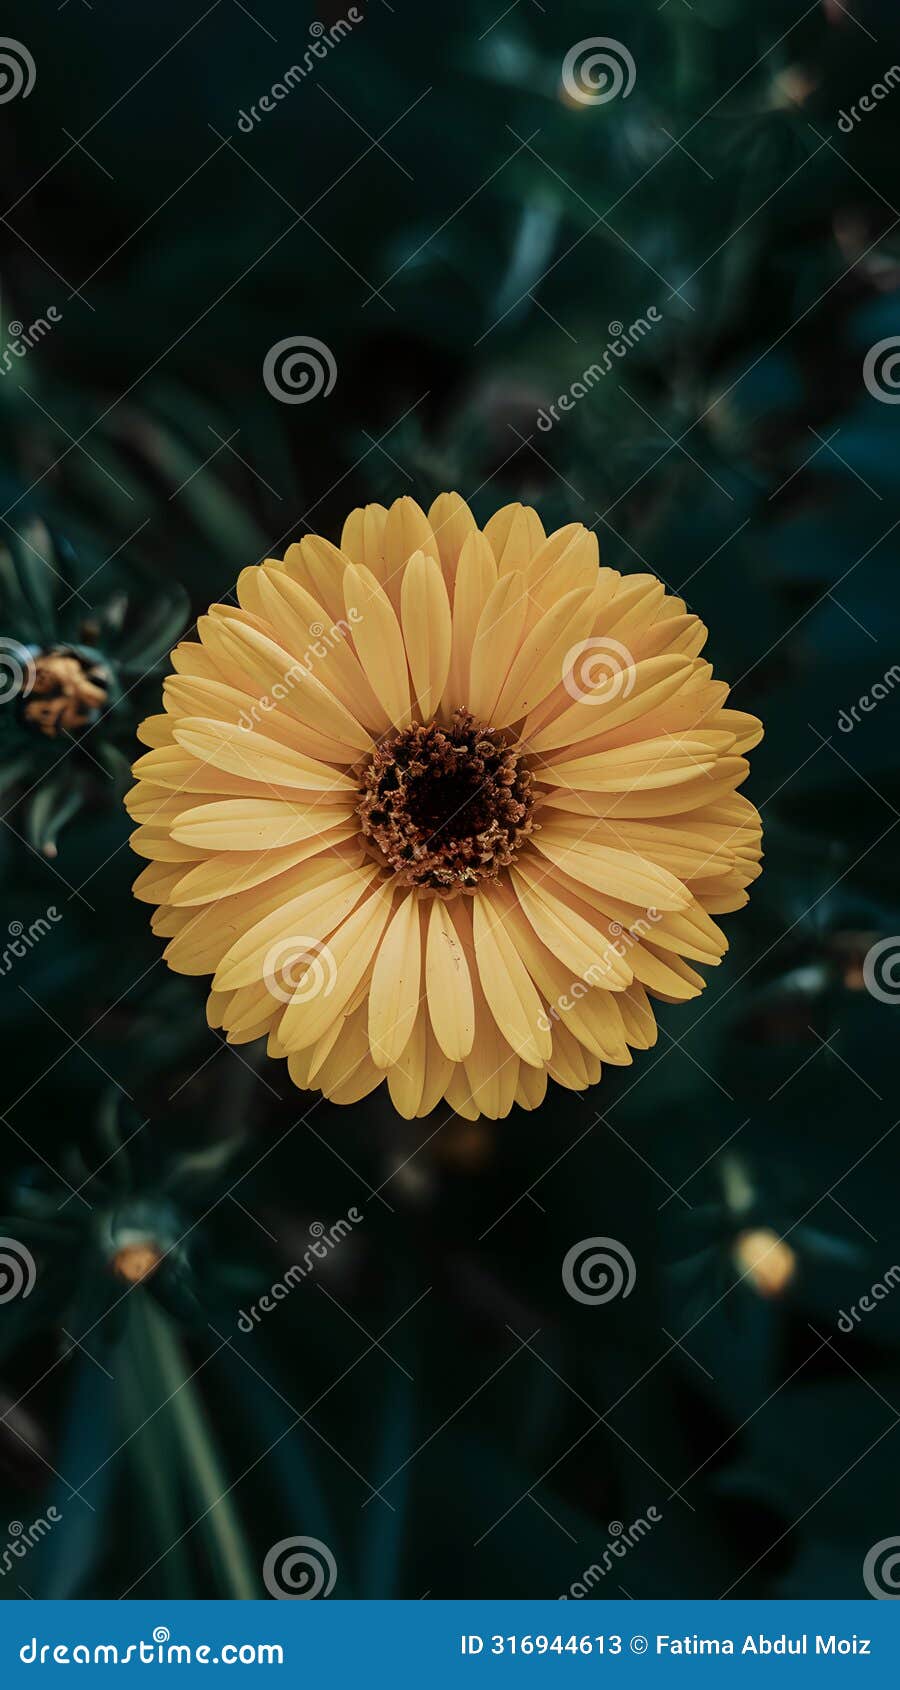 lonely beauty vibrant yellow flower graces the garden landscape